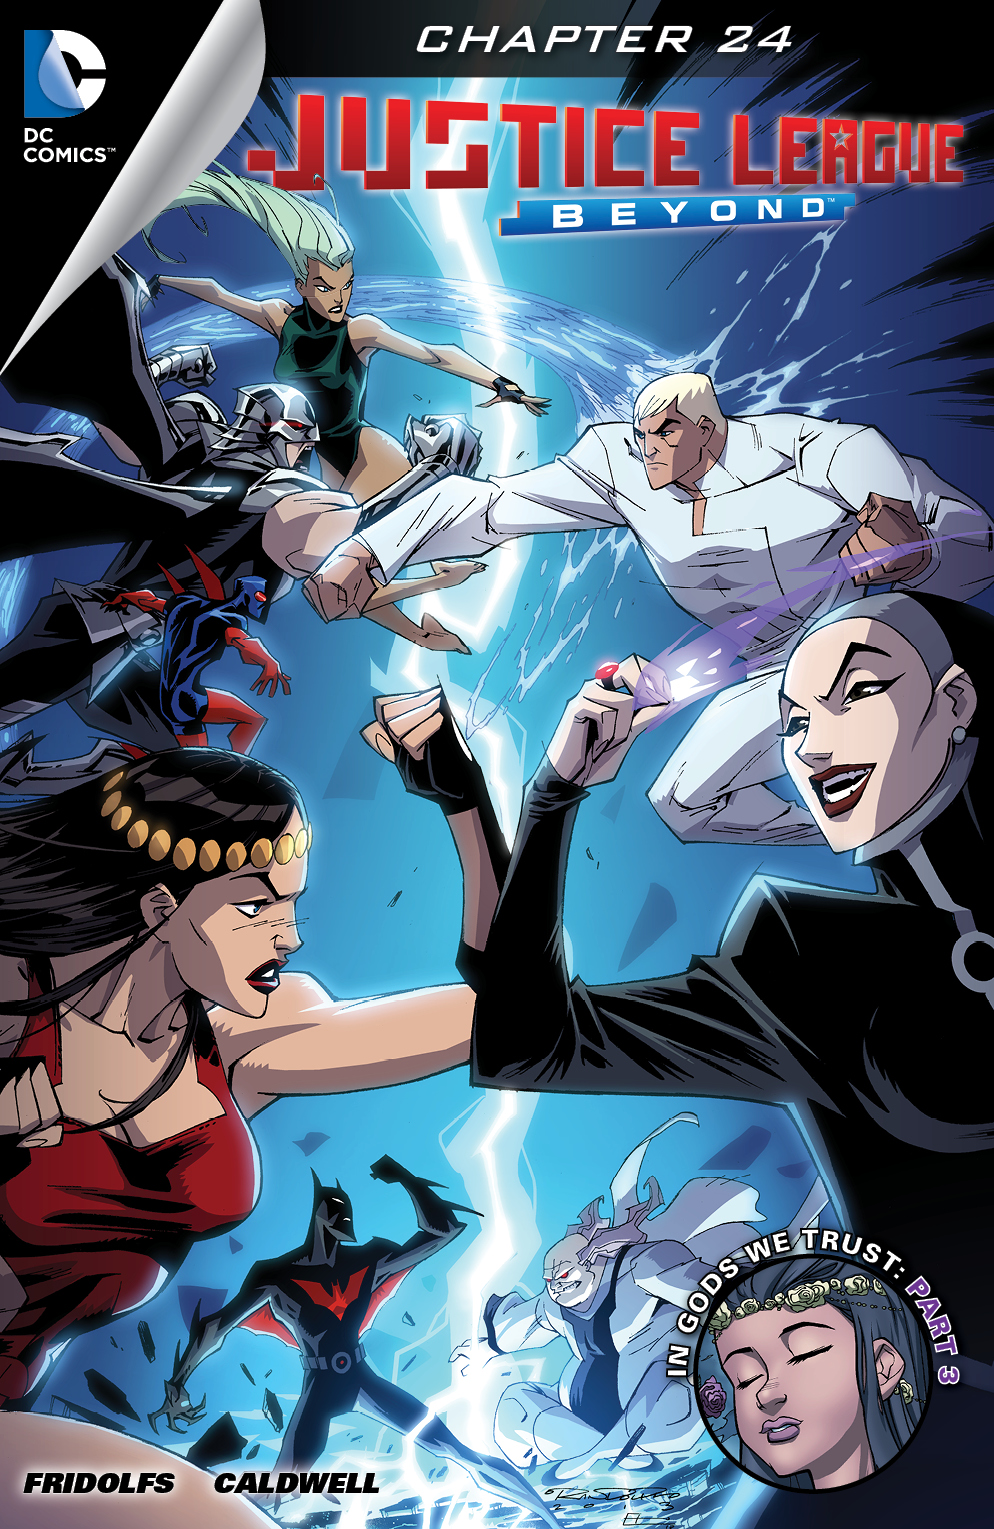 Justice League Beyond #24 preview images